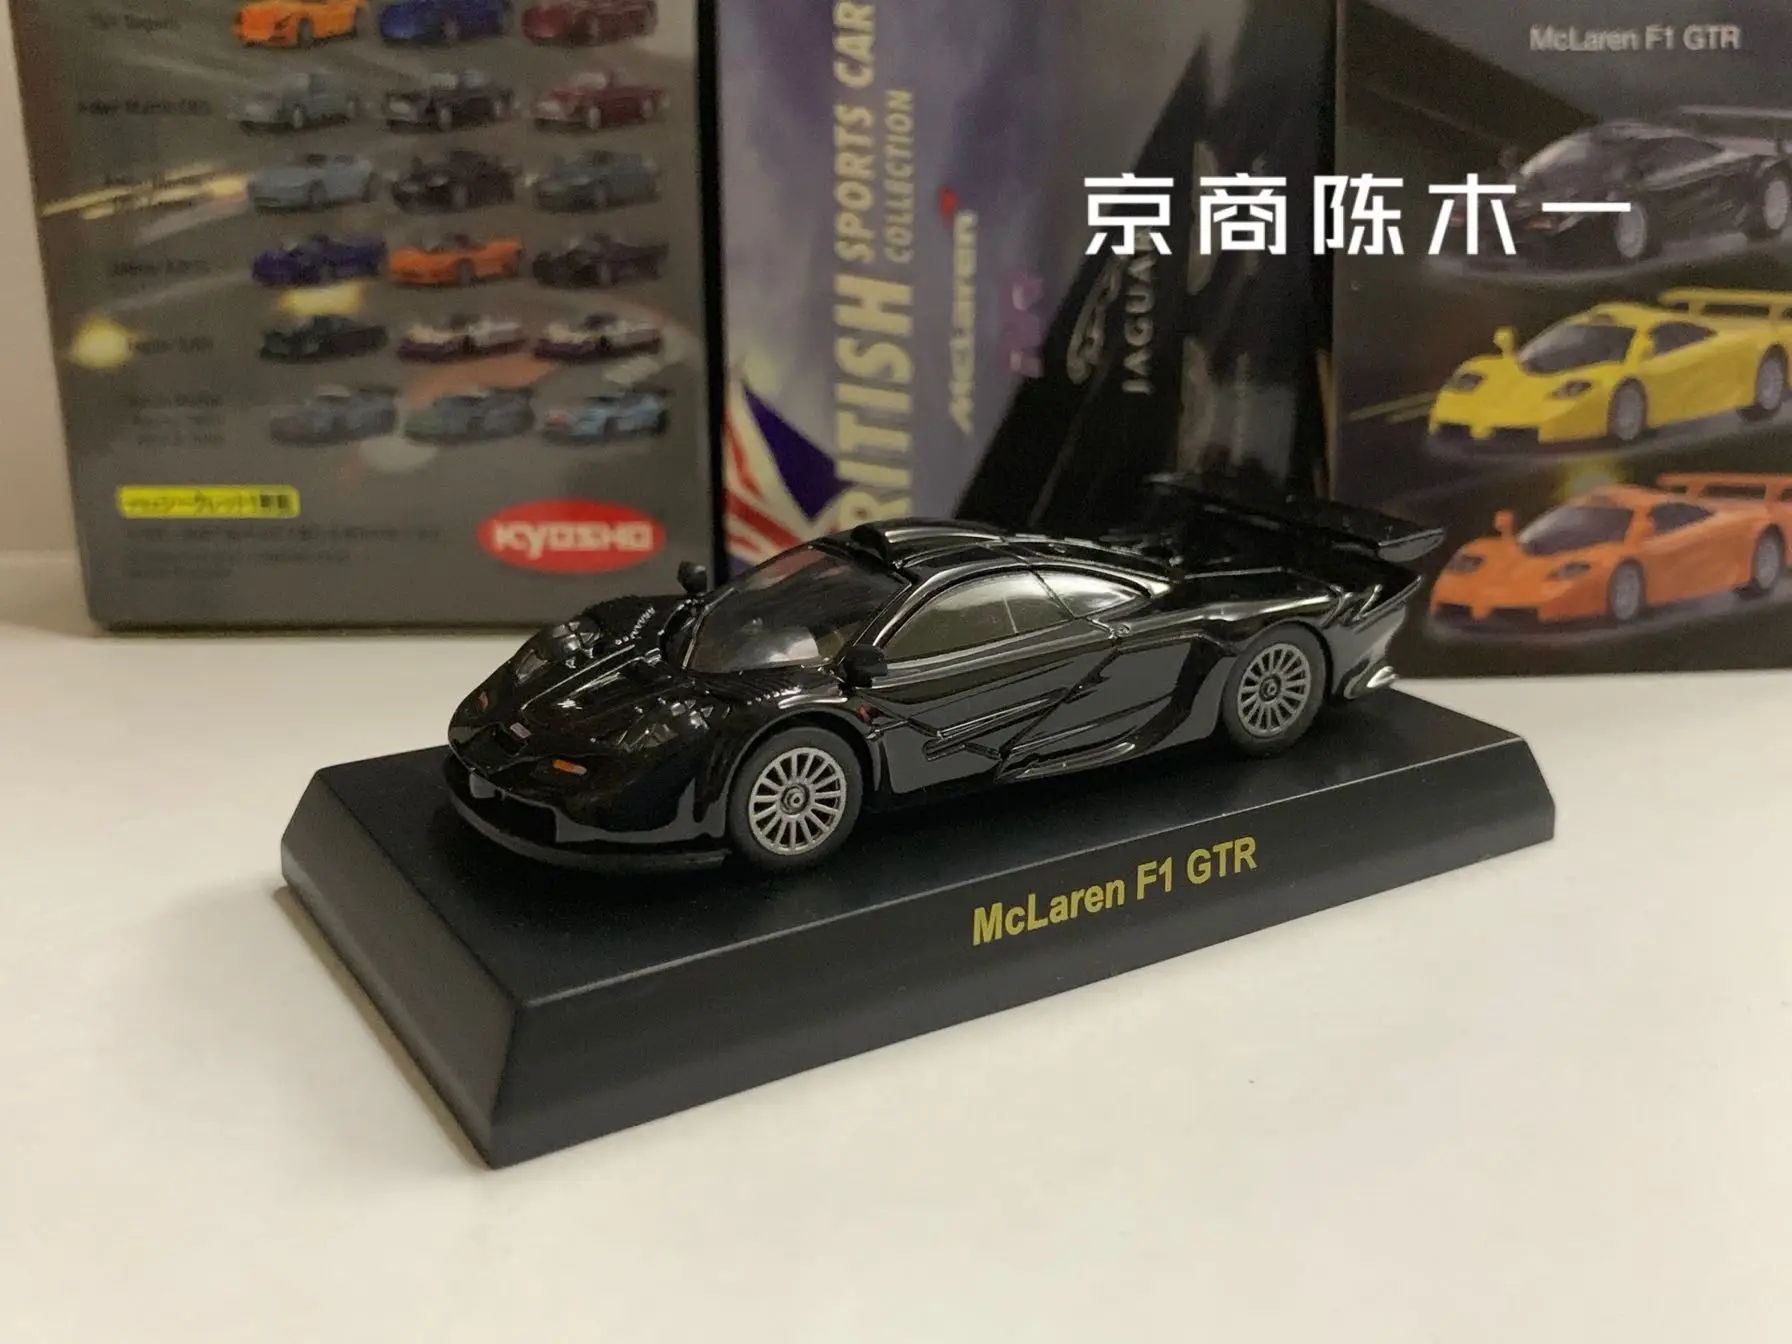 

1/64 KYOSHO McLaren F1 GTR Black Long Tail Edition Le Mans Collection of die-cast alloy car decoration model toys